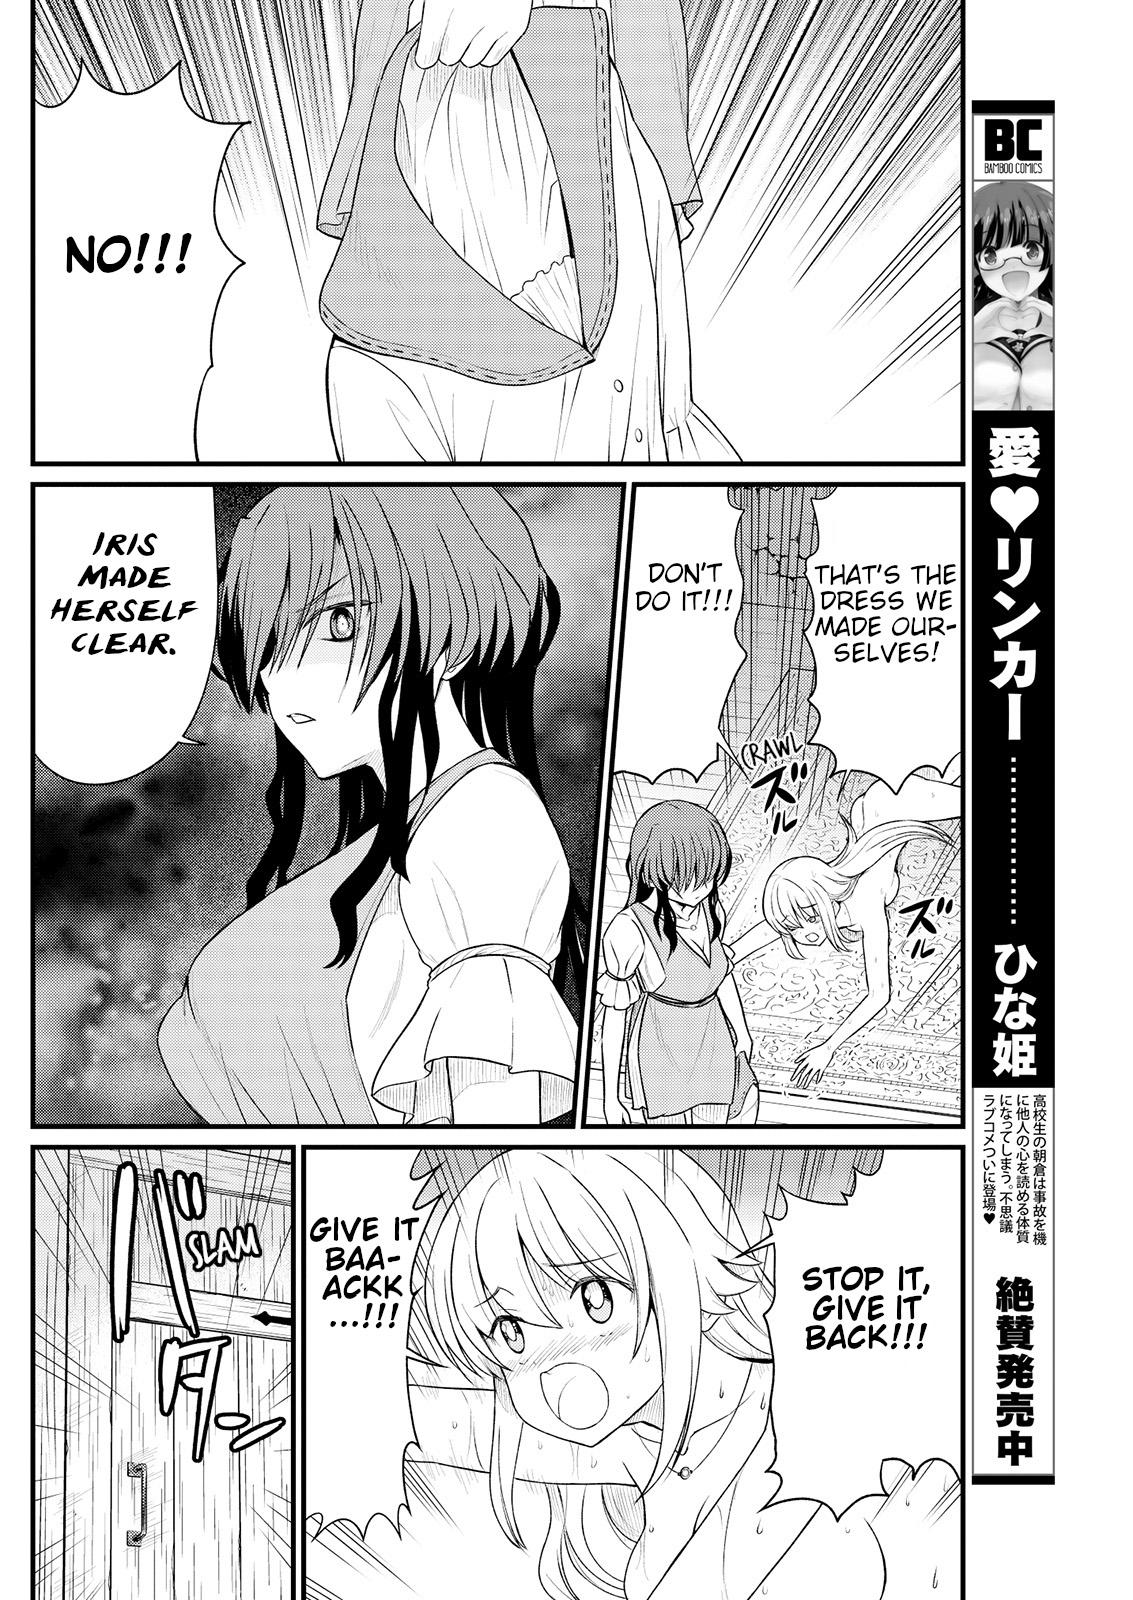 Nice Tits Kukkorose no Himekishi to nari, Yuri Shoukan de Hataraku koto ni Narimashita. 9 | Becoming Princess Knight and Working at Yuri Brothel 9 Gapes Gaping Asshole - Page 8